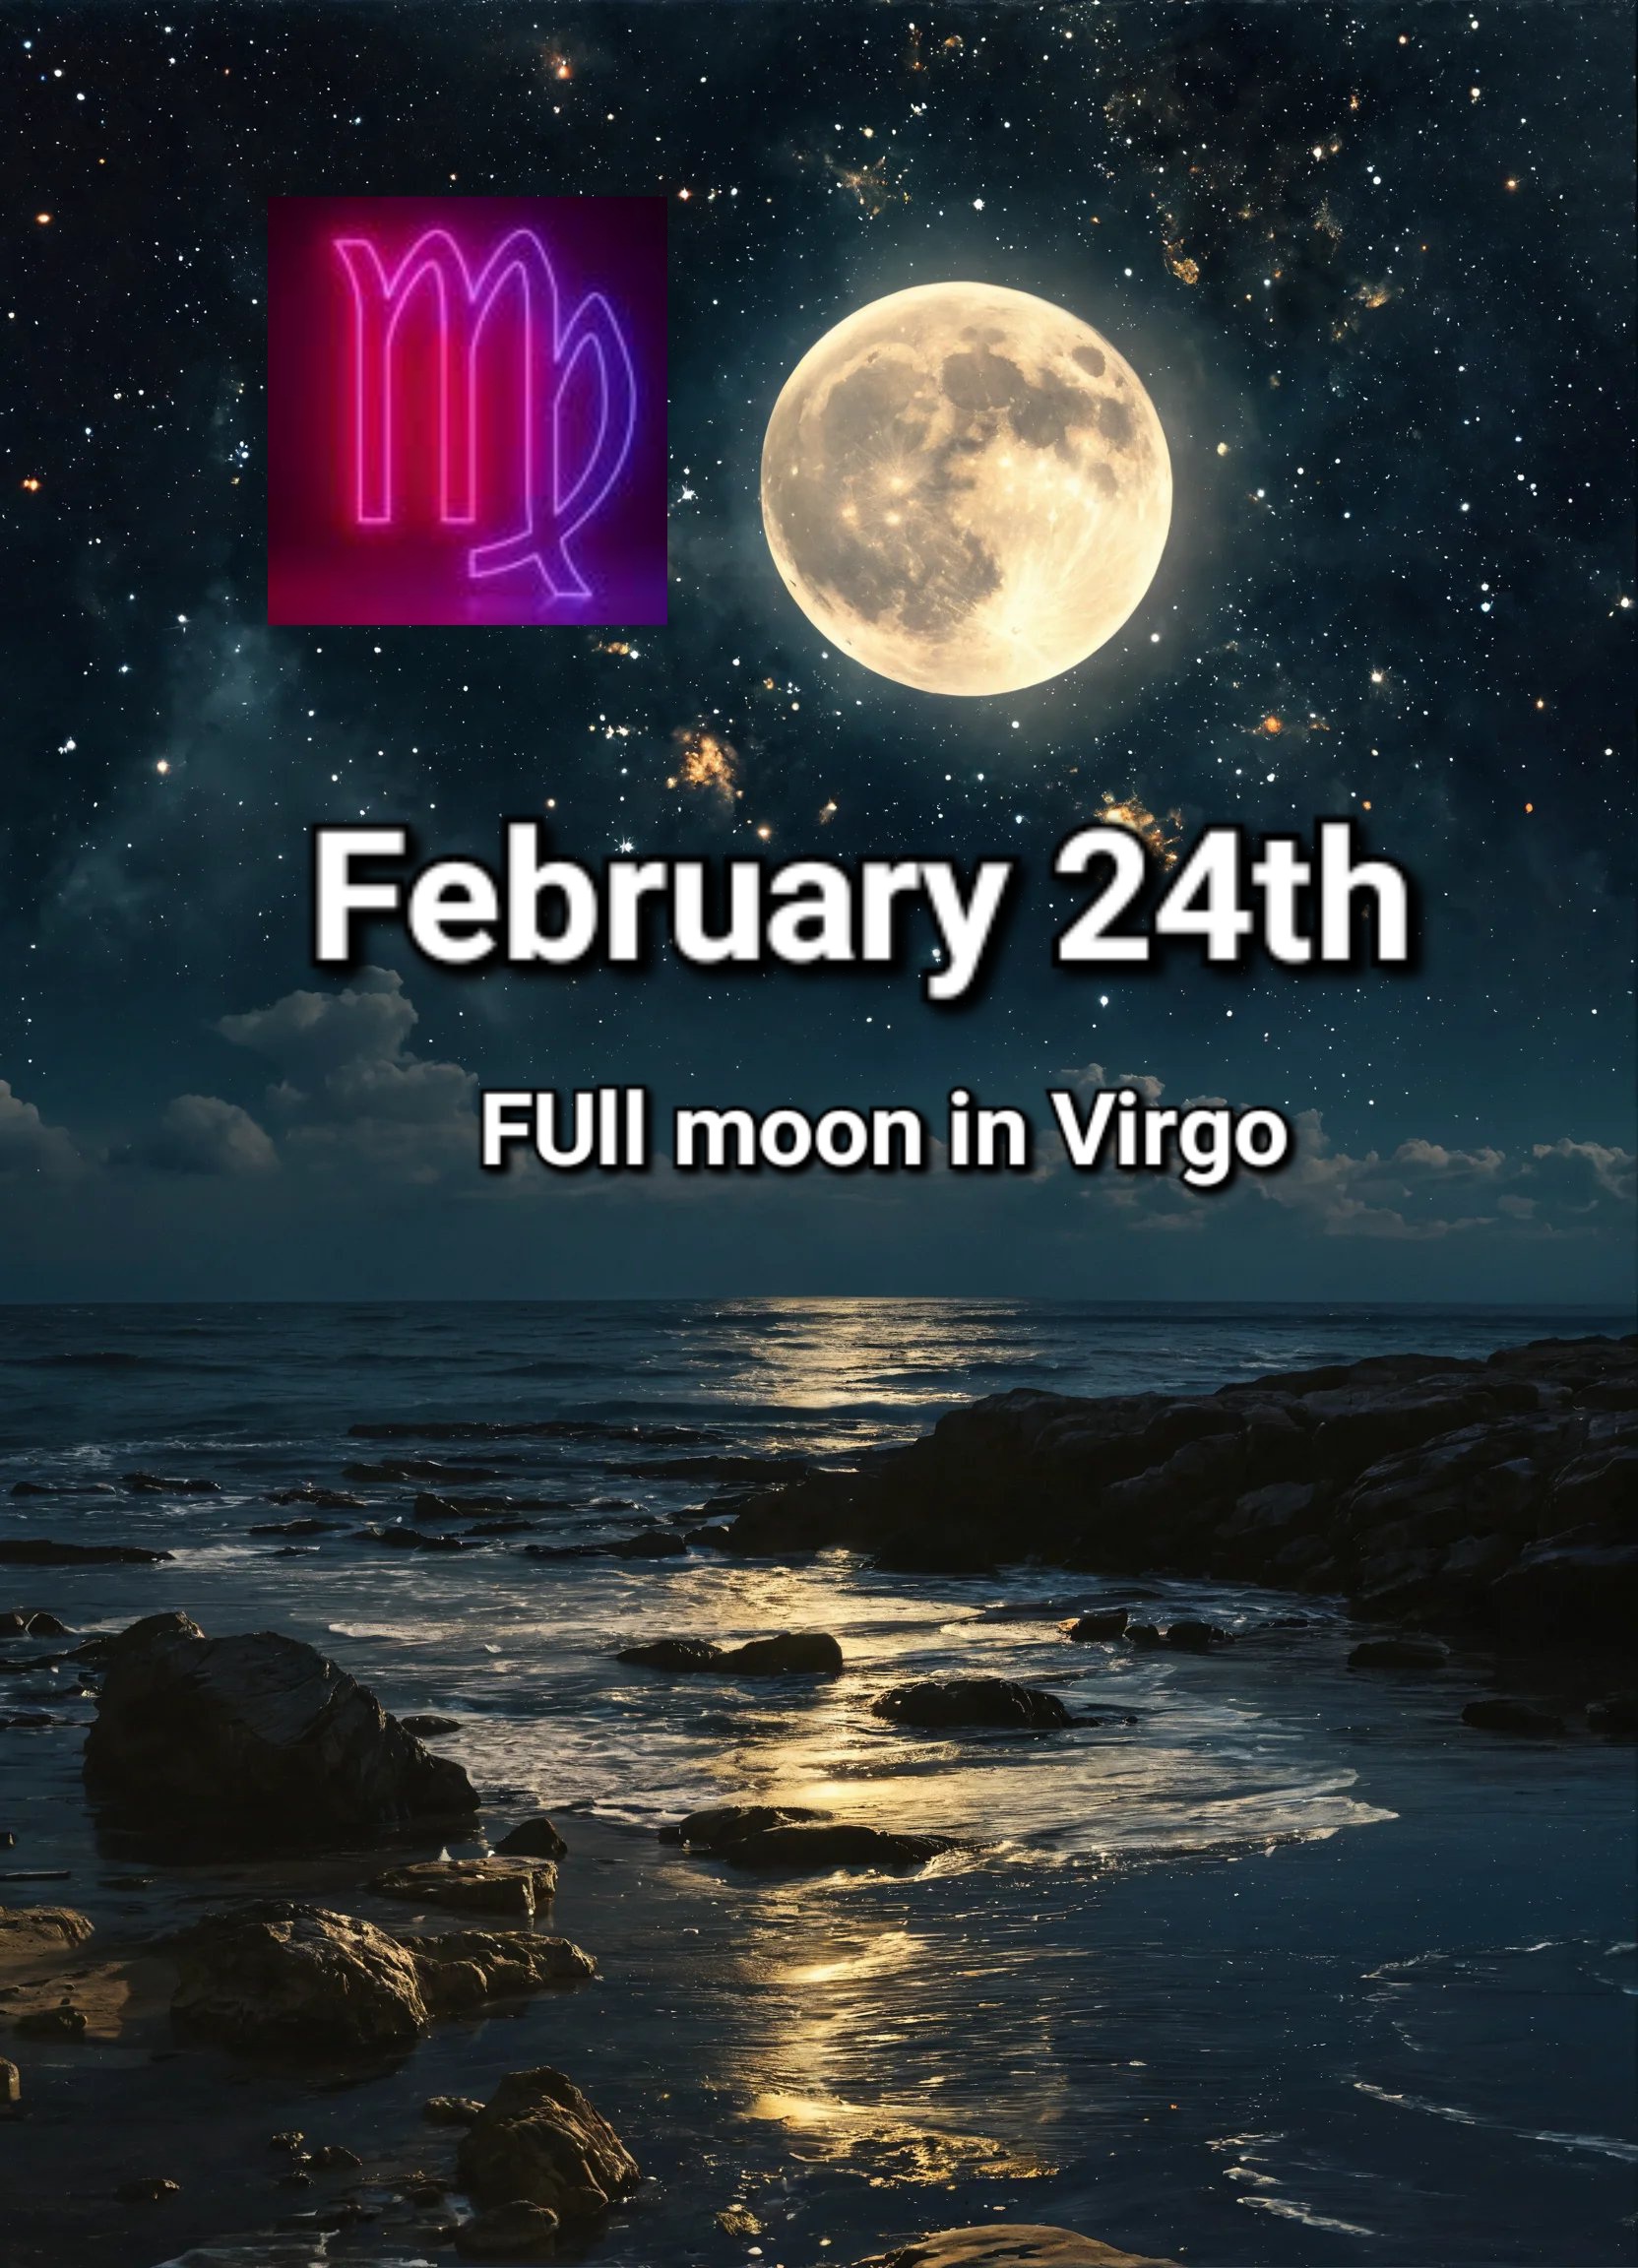 February 24th, Saturday, full moon in Virgo.